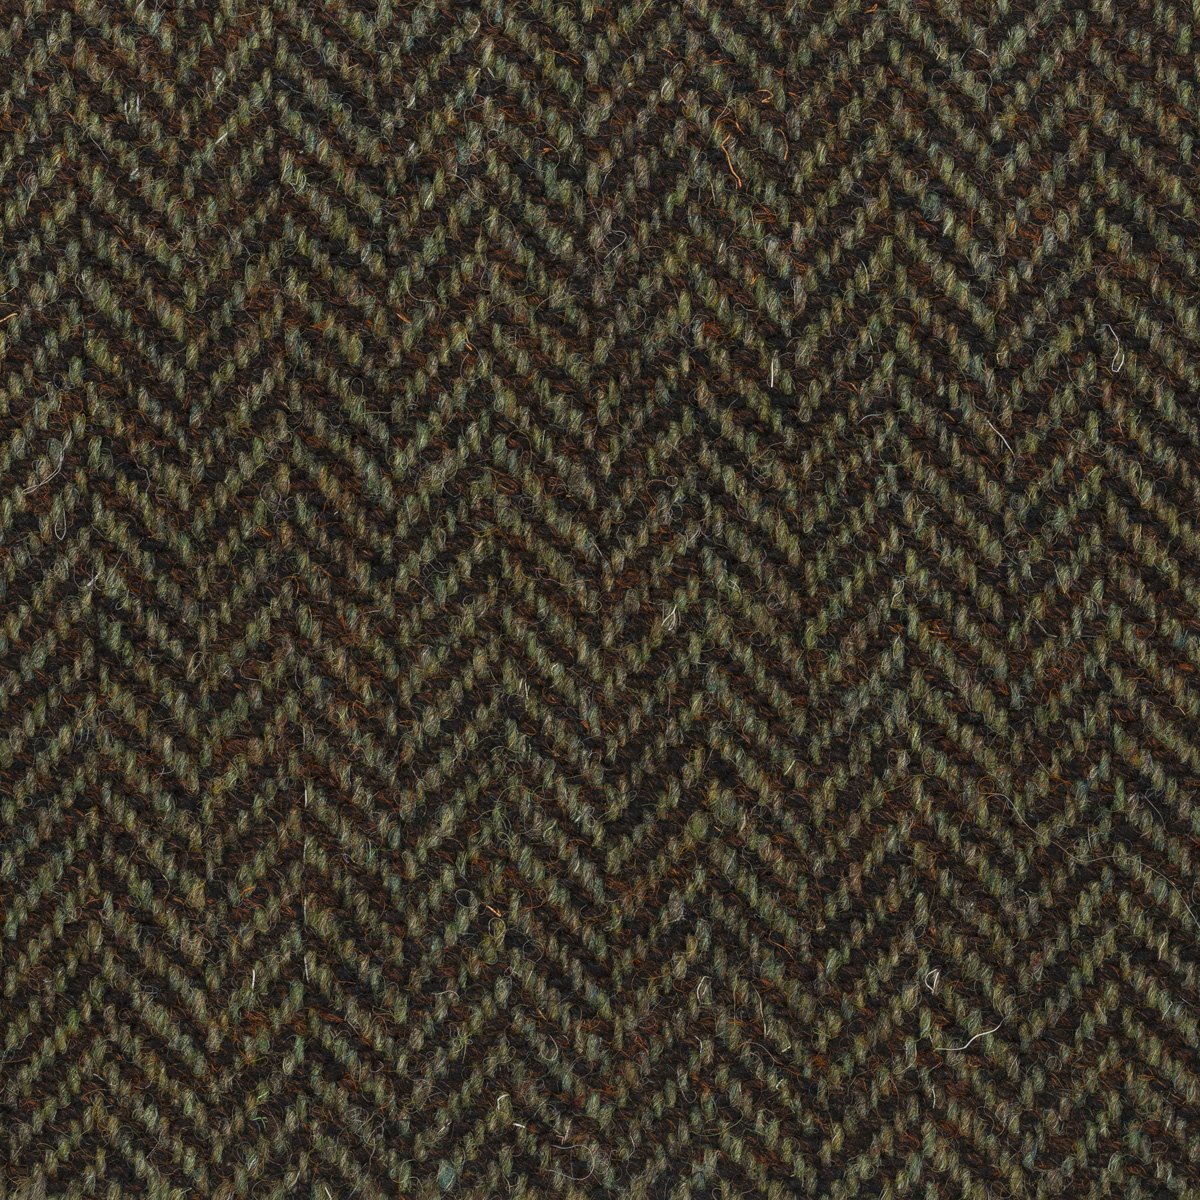 J.FitzPatrick Footwear Forest Tweed Fabric